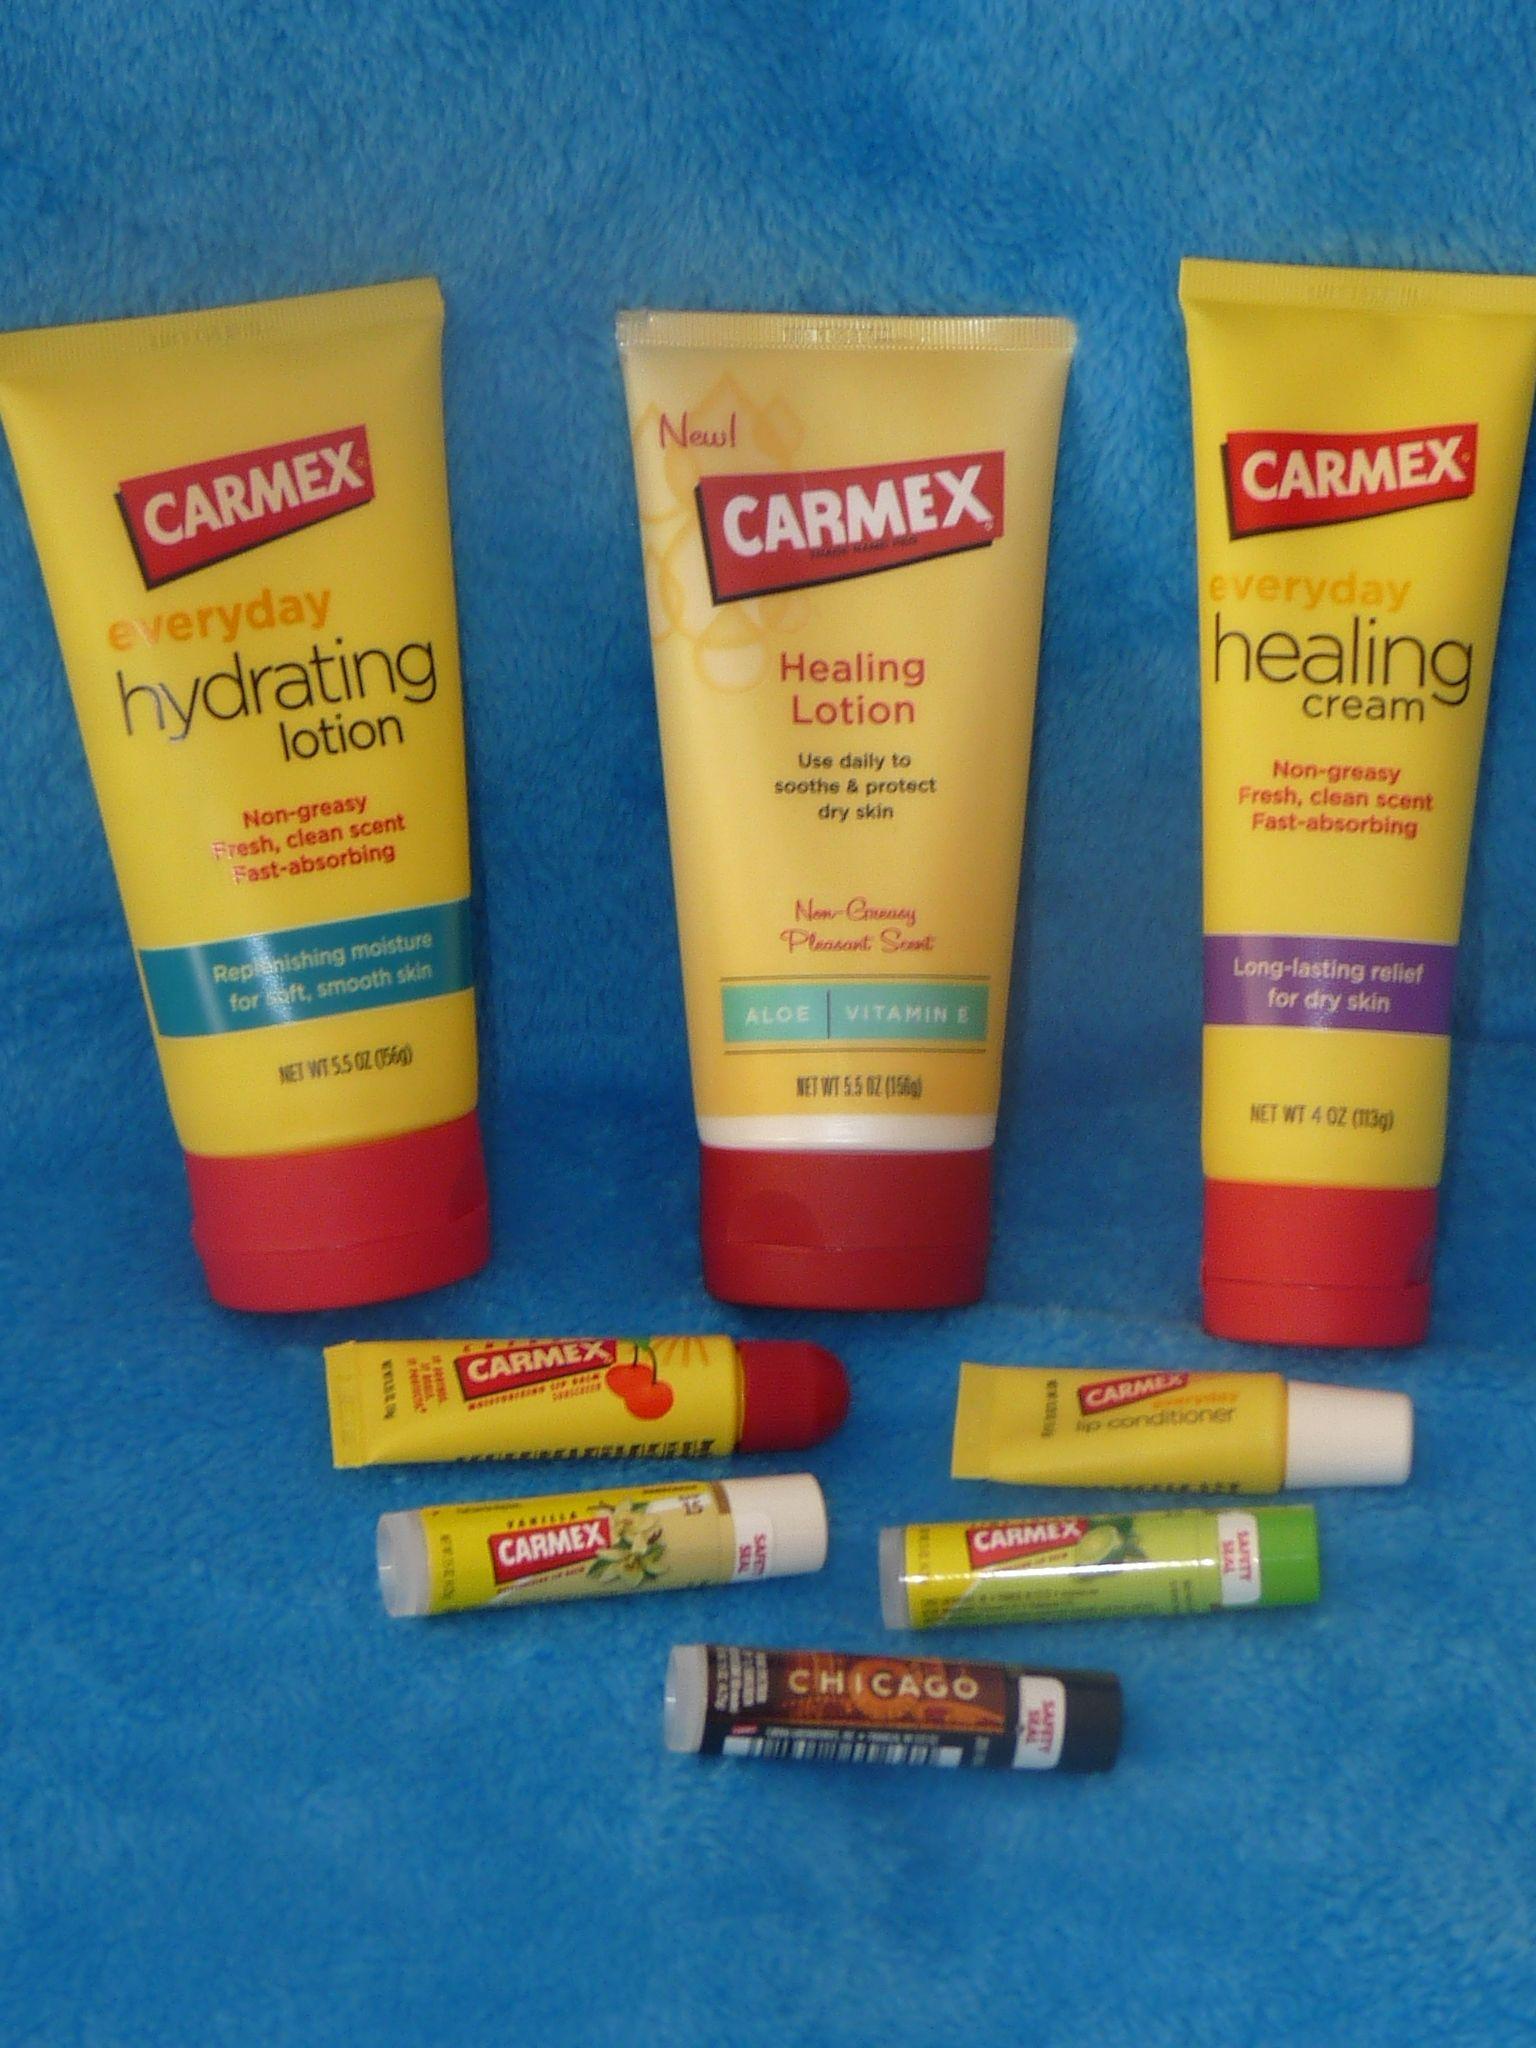 Carmex Logo - Carmex Isn't Just For Lips! Corner Cori